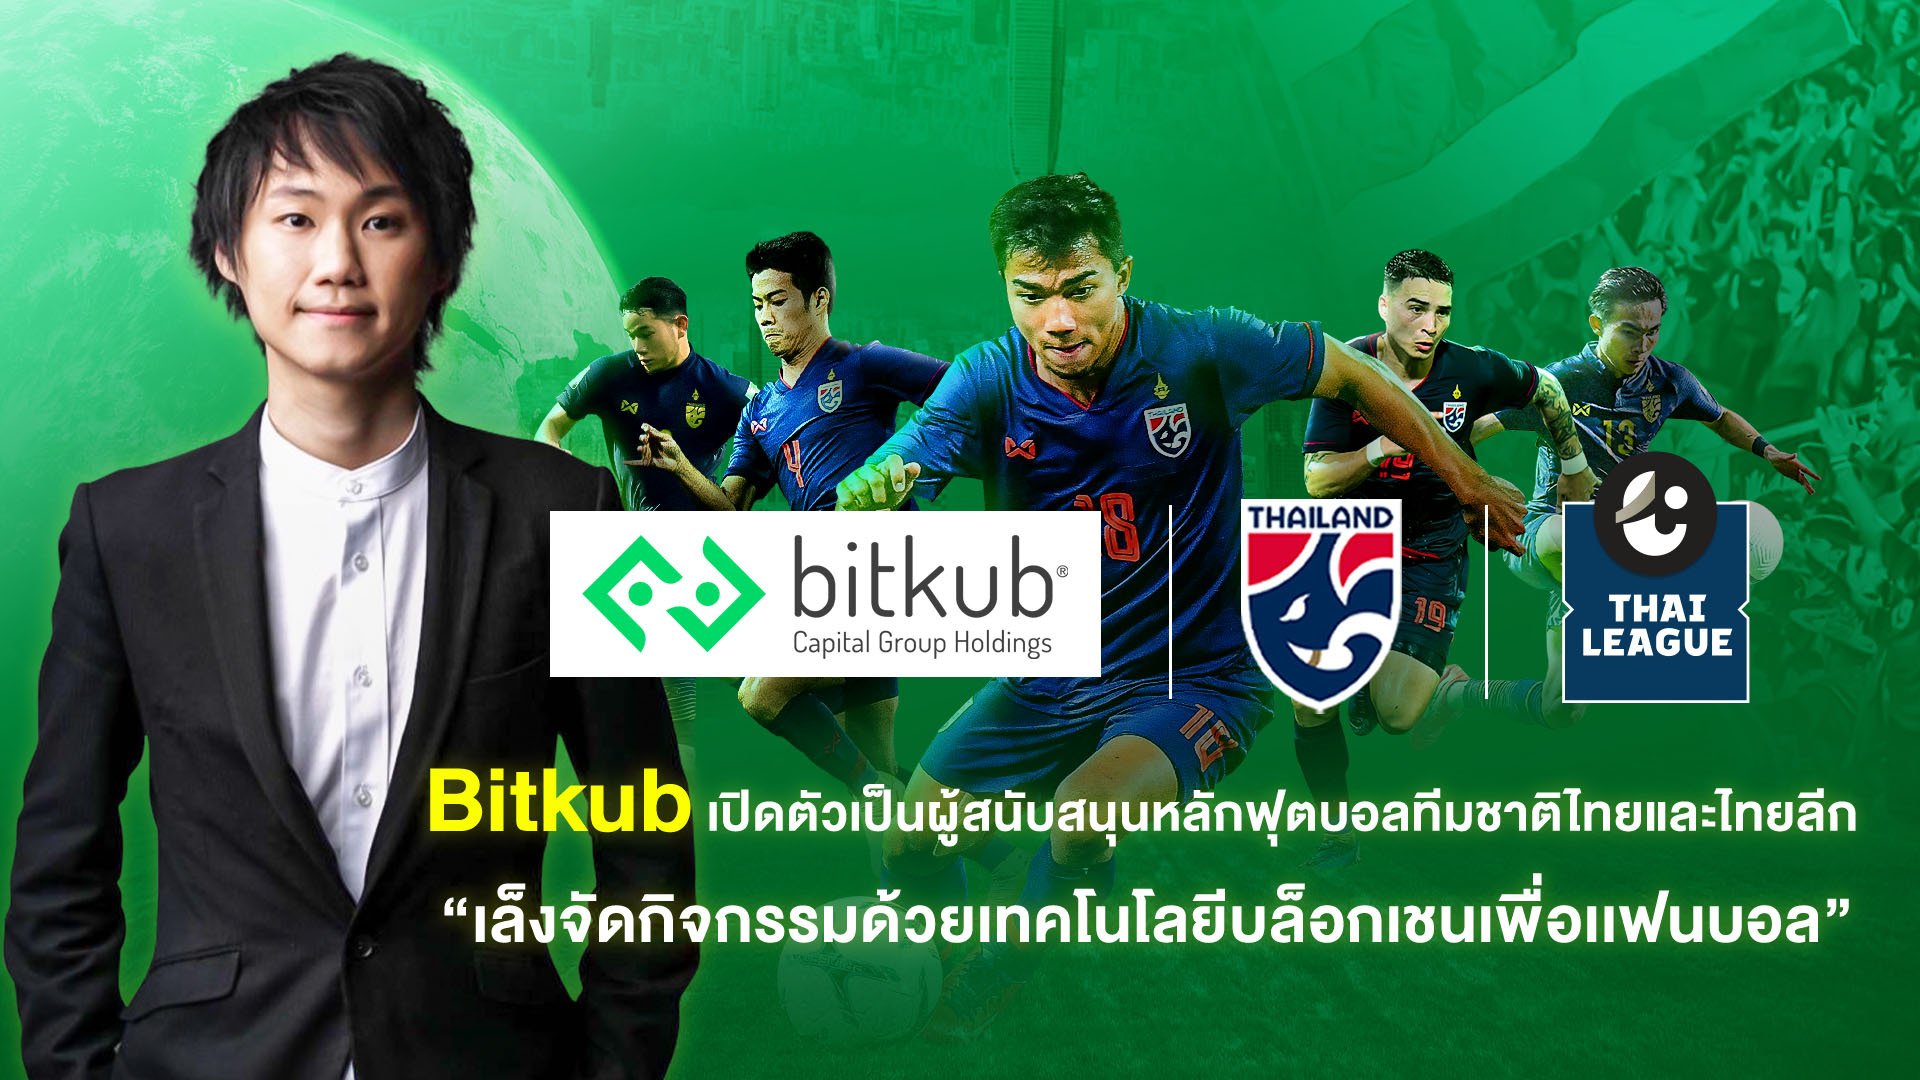 Bitkub เปิดตัวเป็นผู้สนับสนุนหลักฟุตบอลทีมชาติไทย และไทยลีกรายใหม่